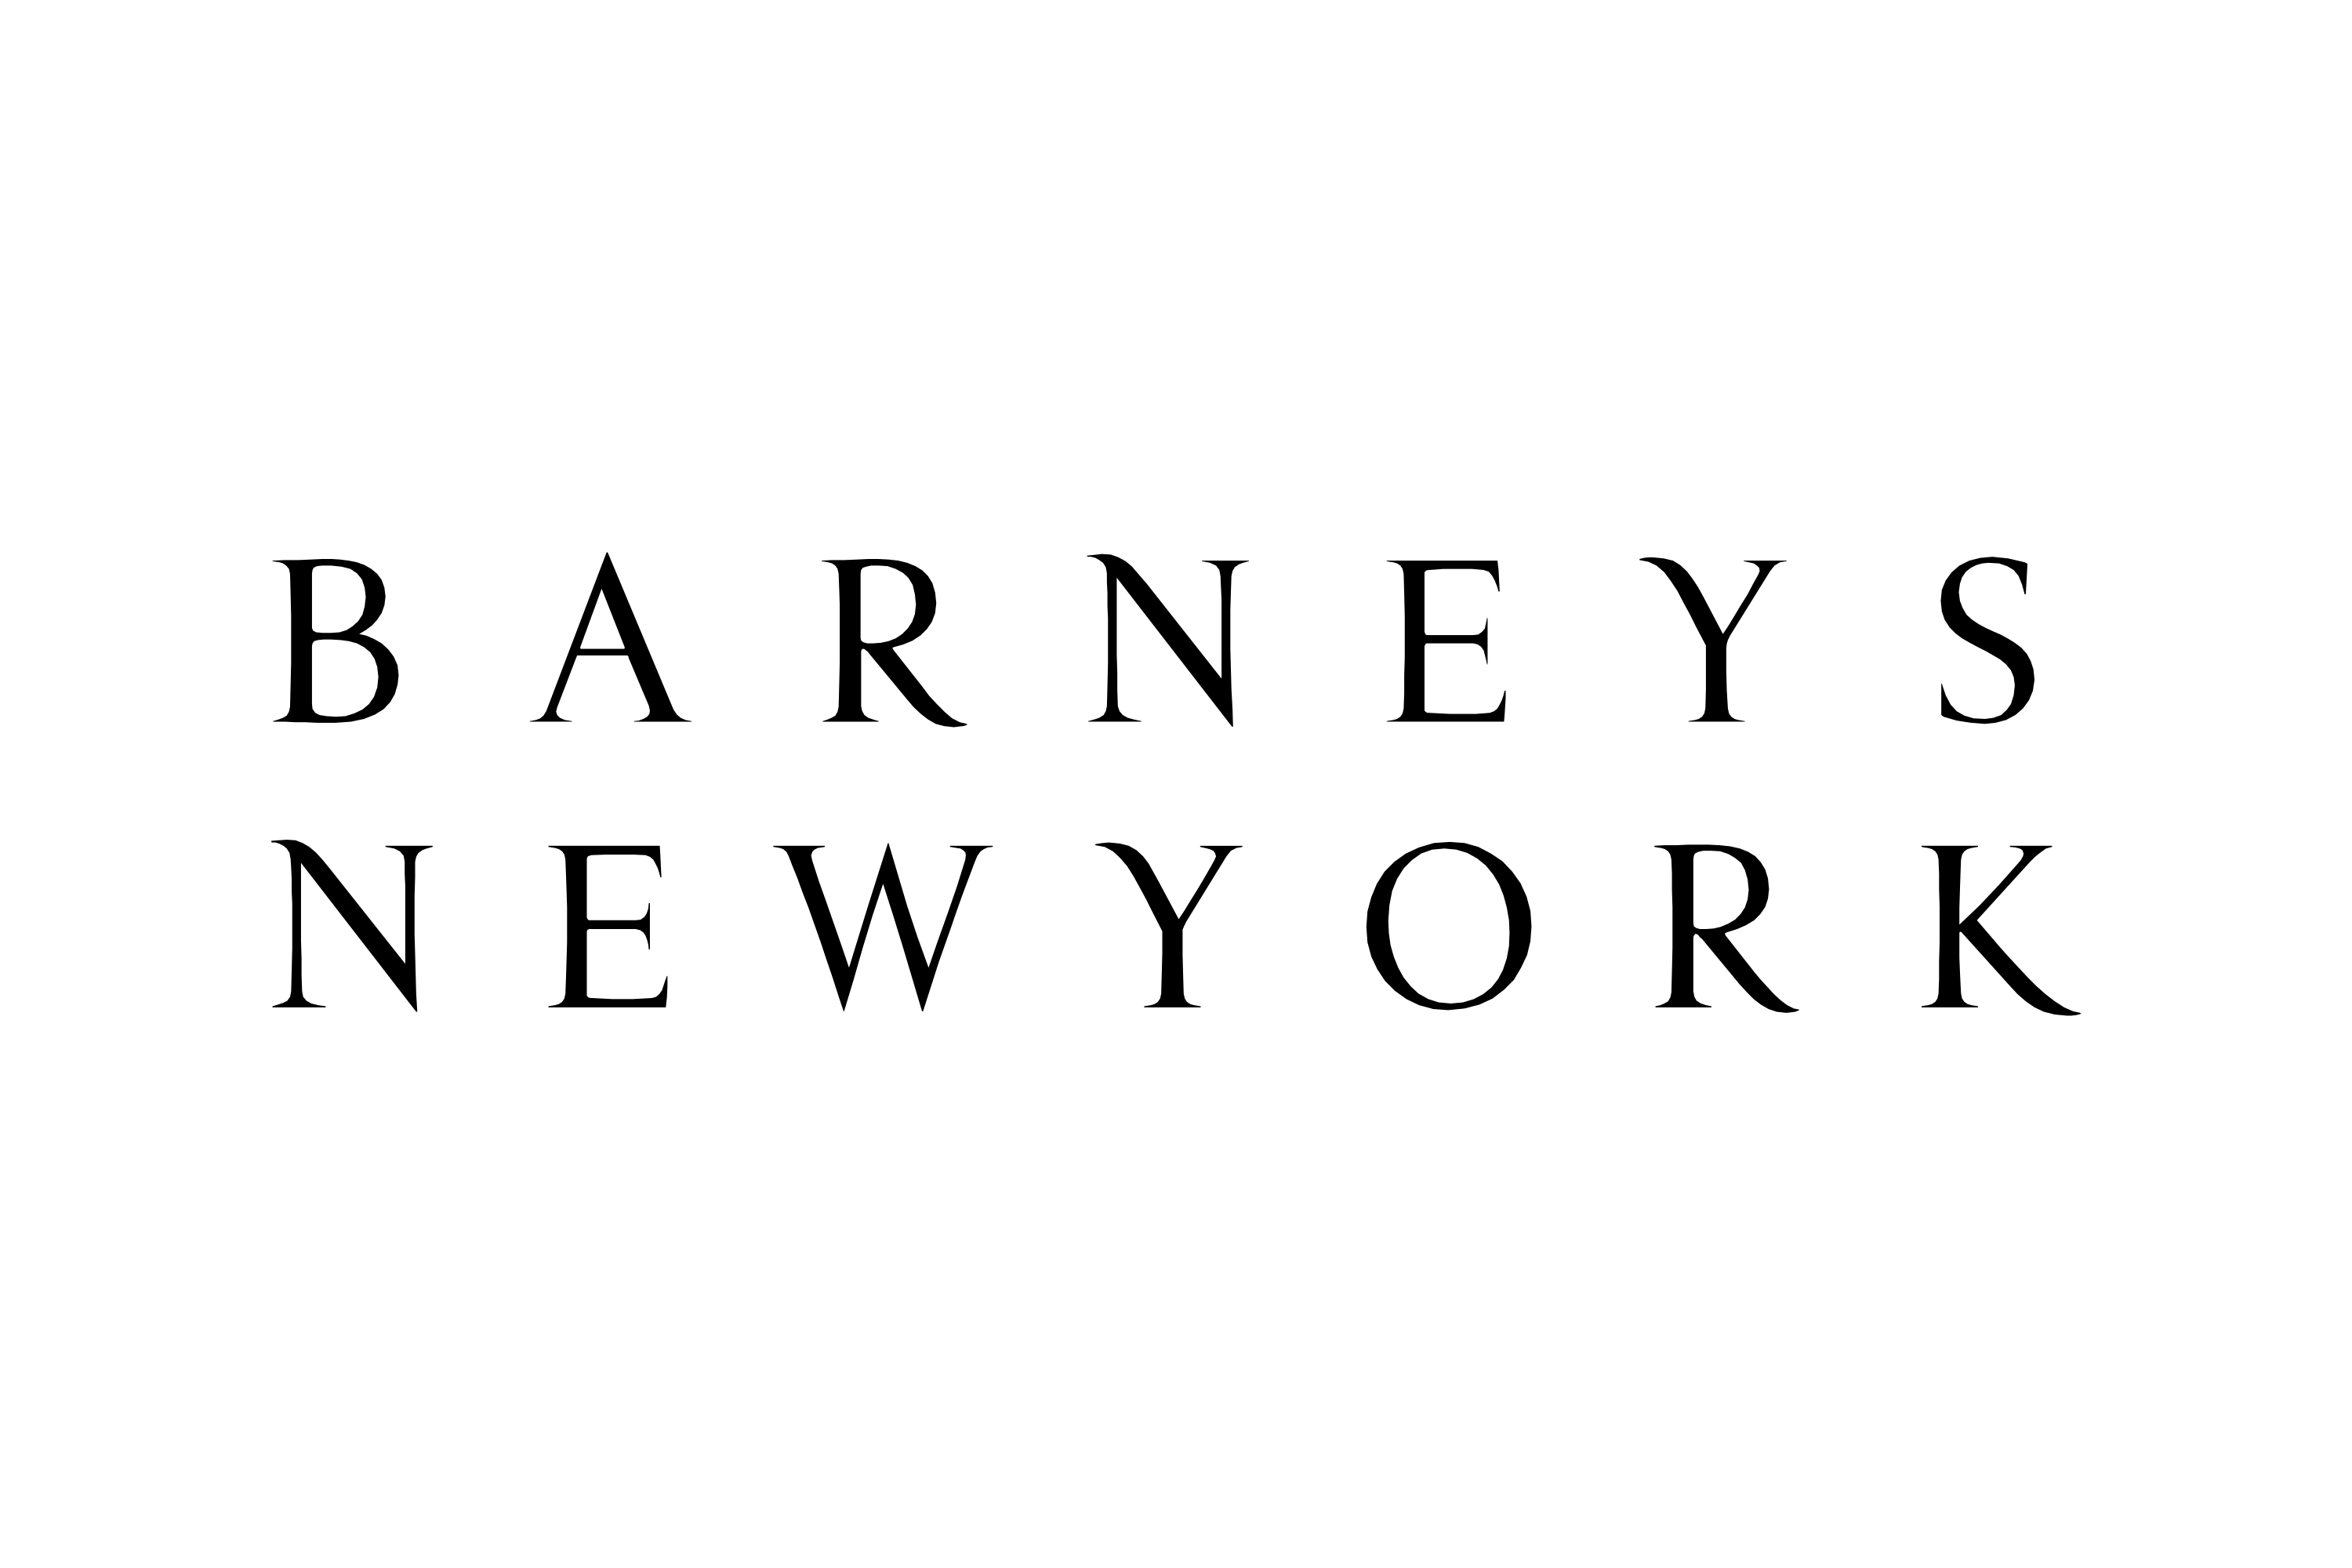 Download Barneys New York Logo in SVG Vector or PNG File Format - Logo.wine